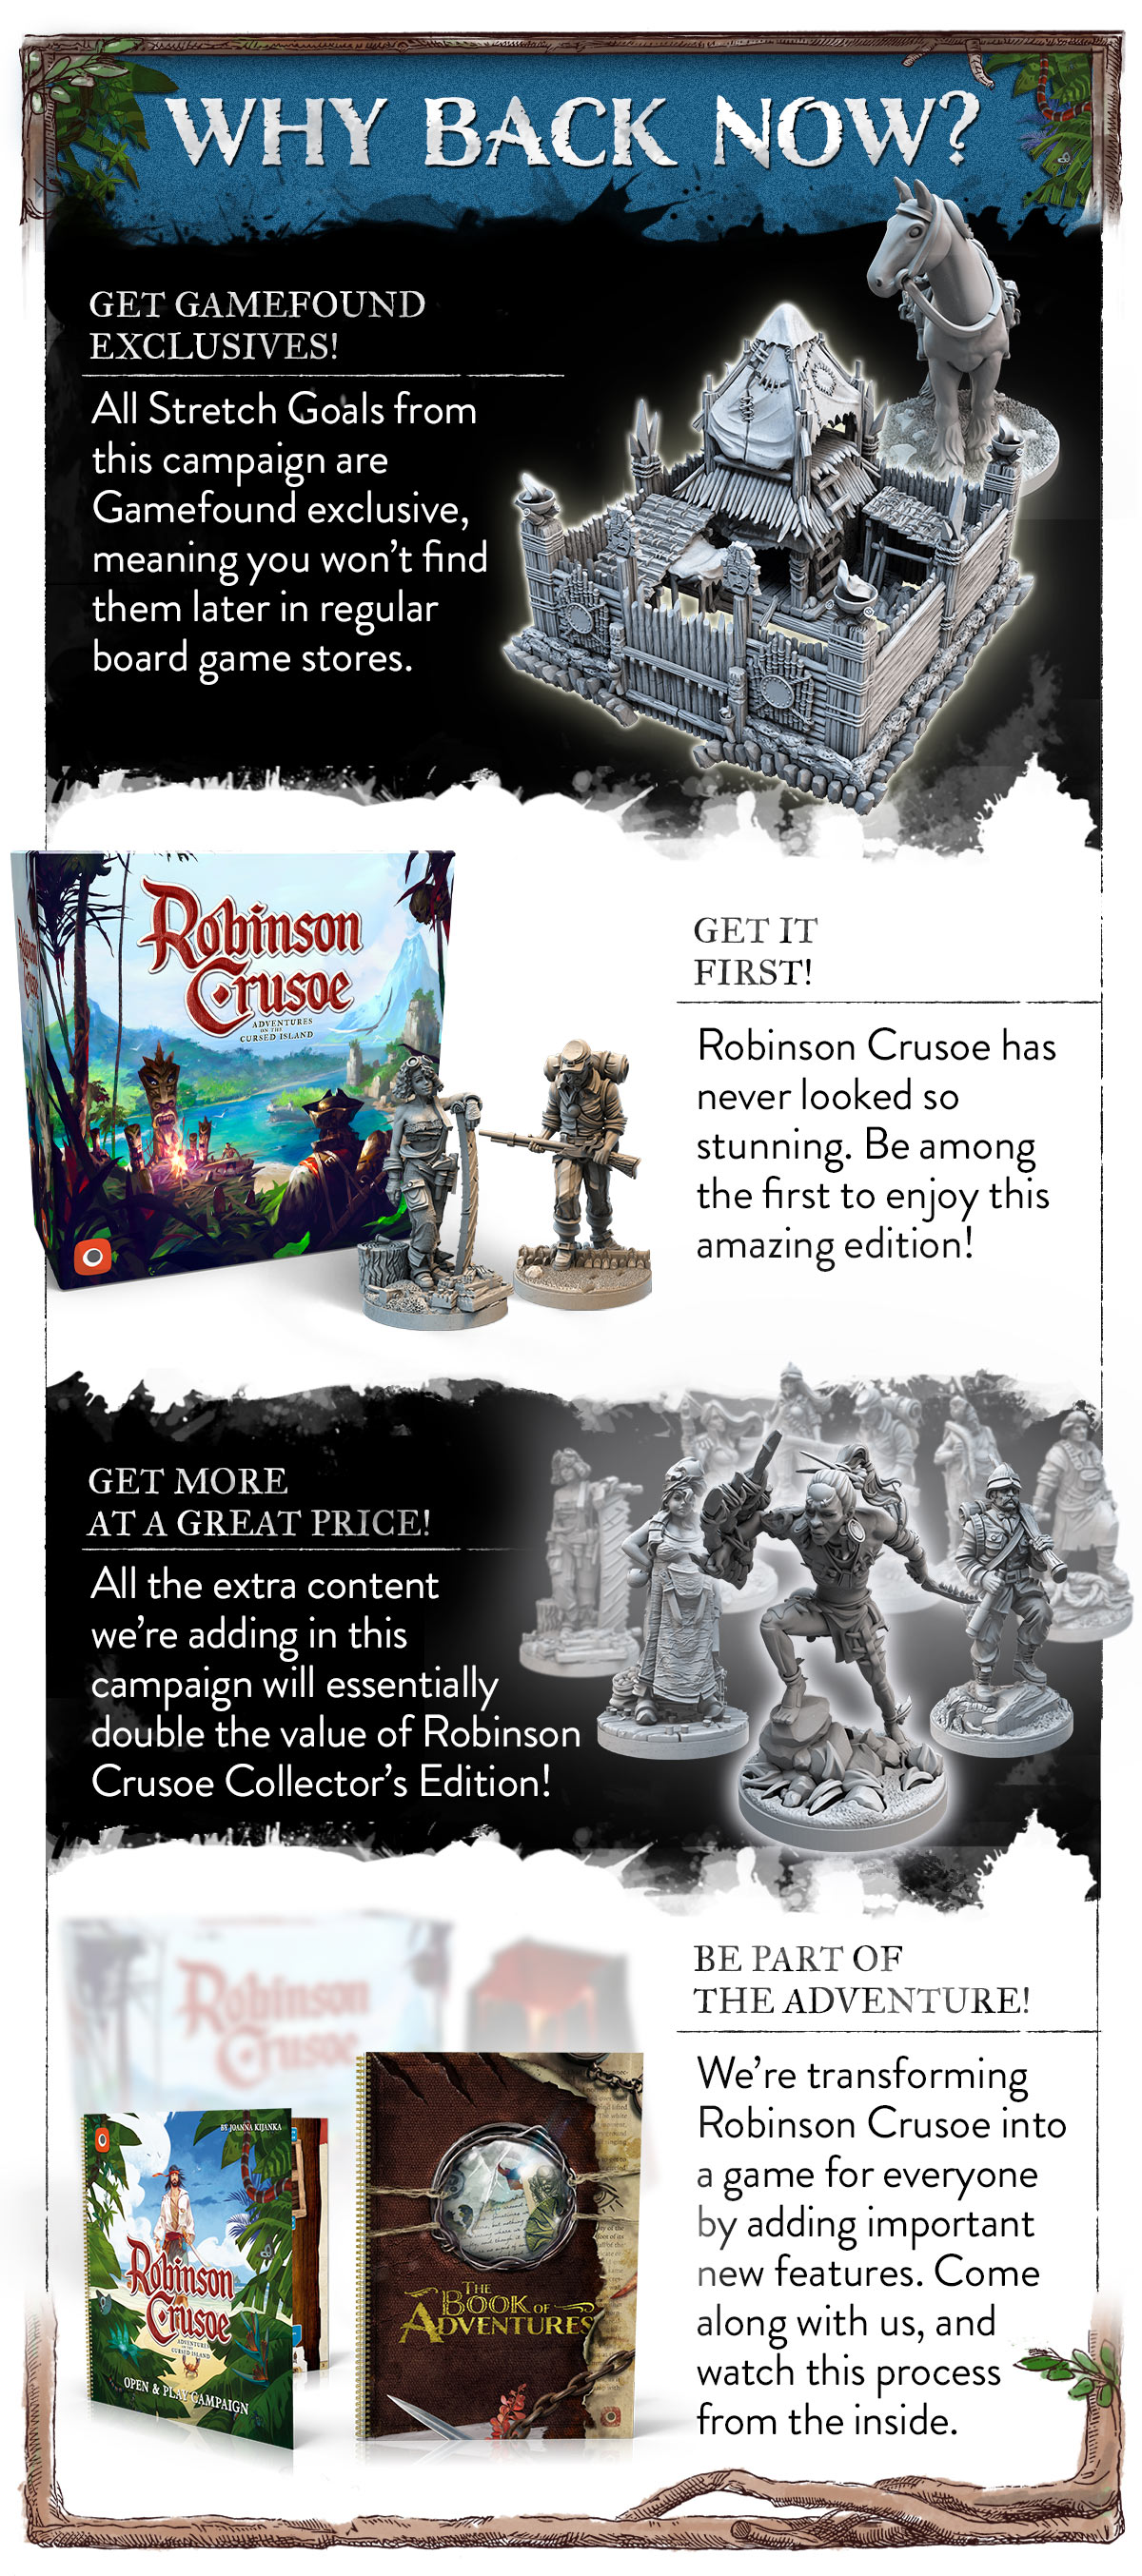 Robinson Crusoe - Collector's Edition by Portal Games - Gamefound